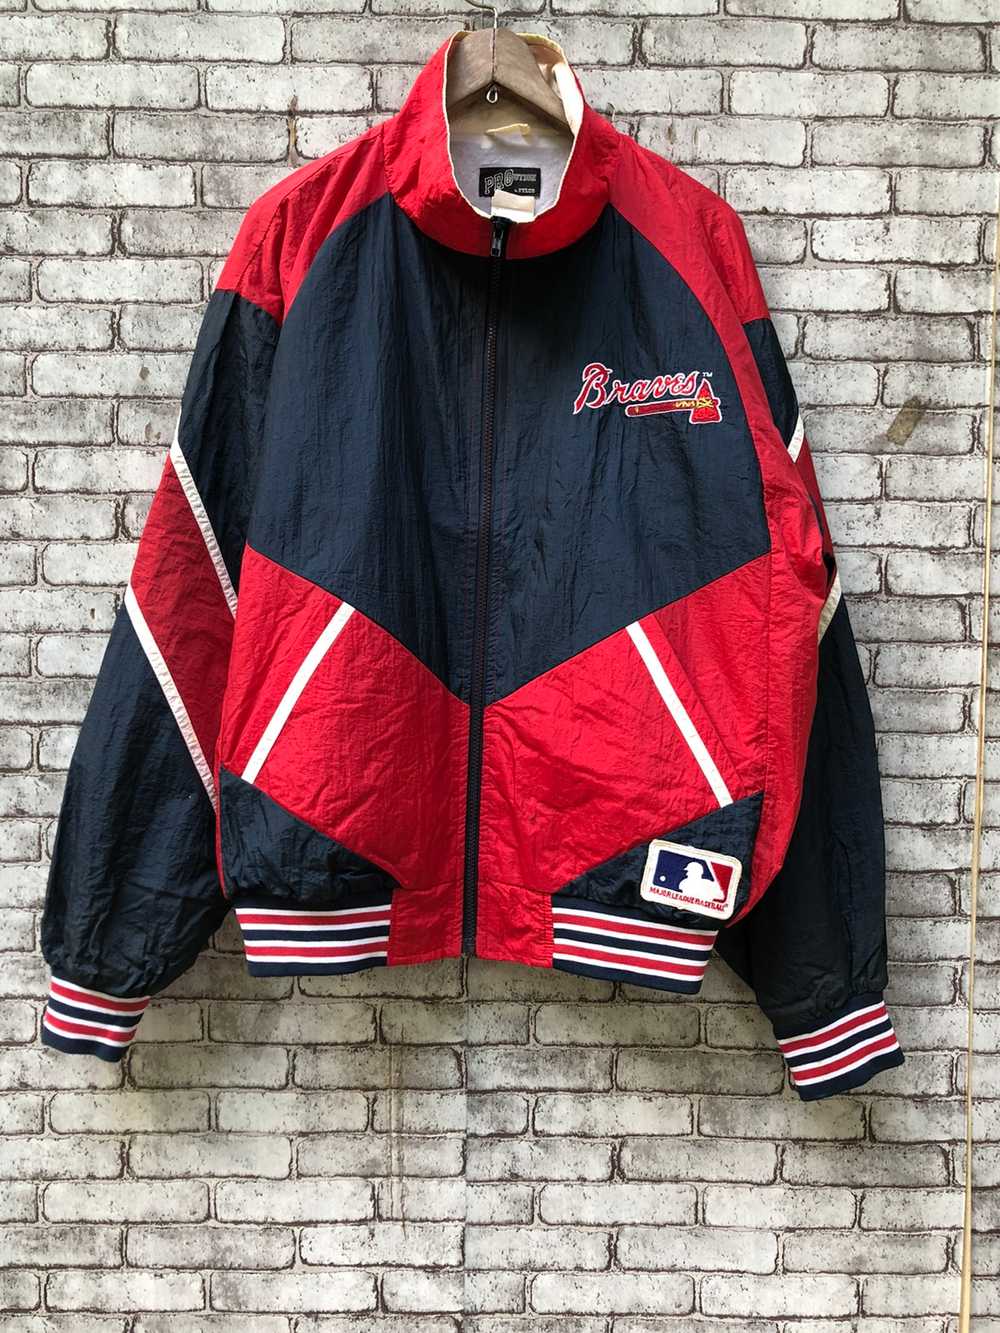 MLB - Japanese Brand Vintage MLB Sweater - image 1